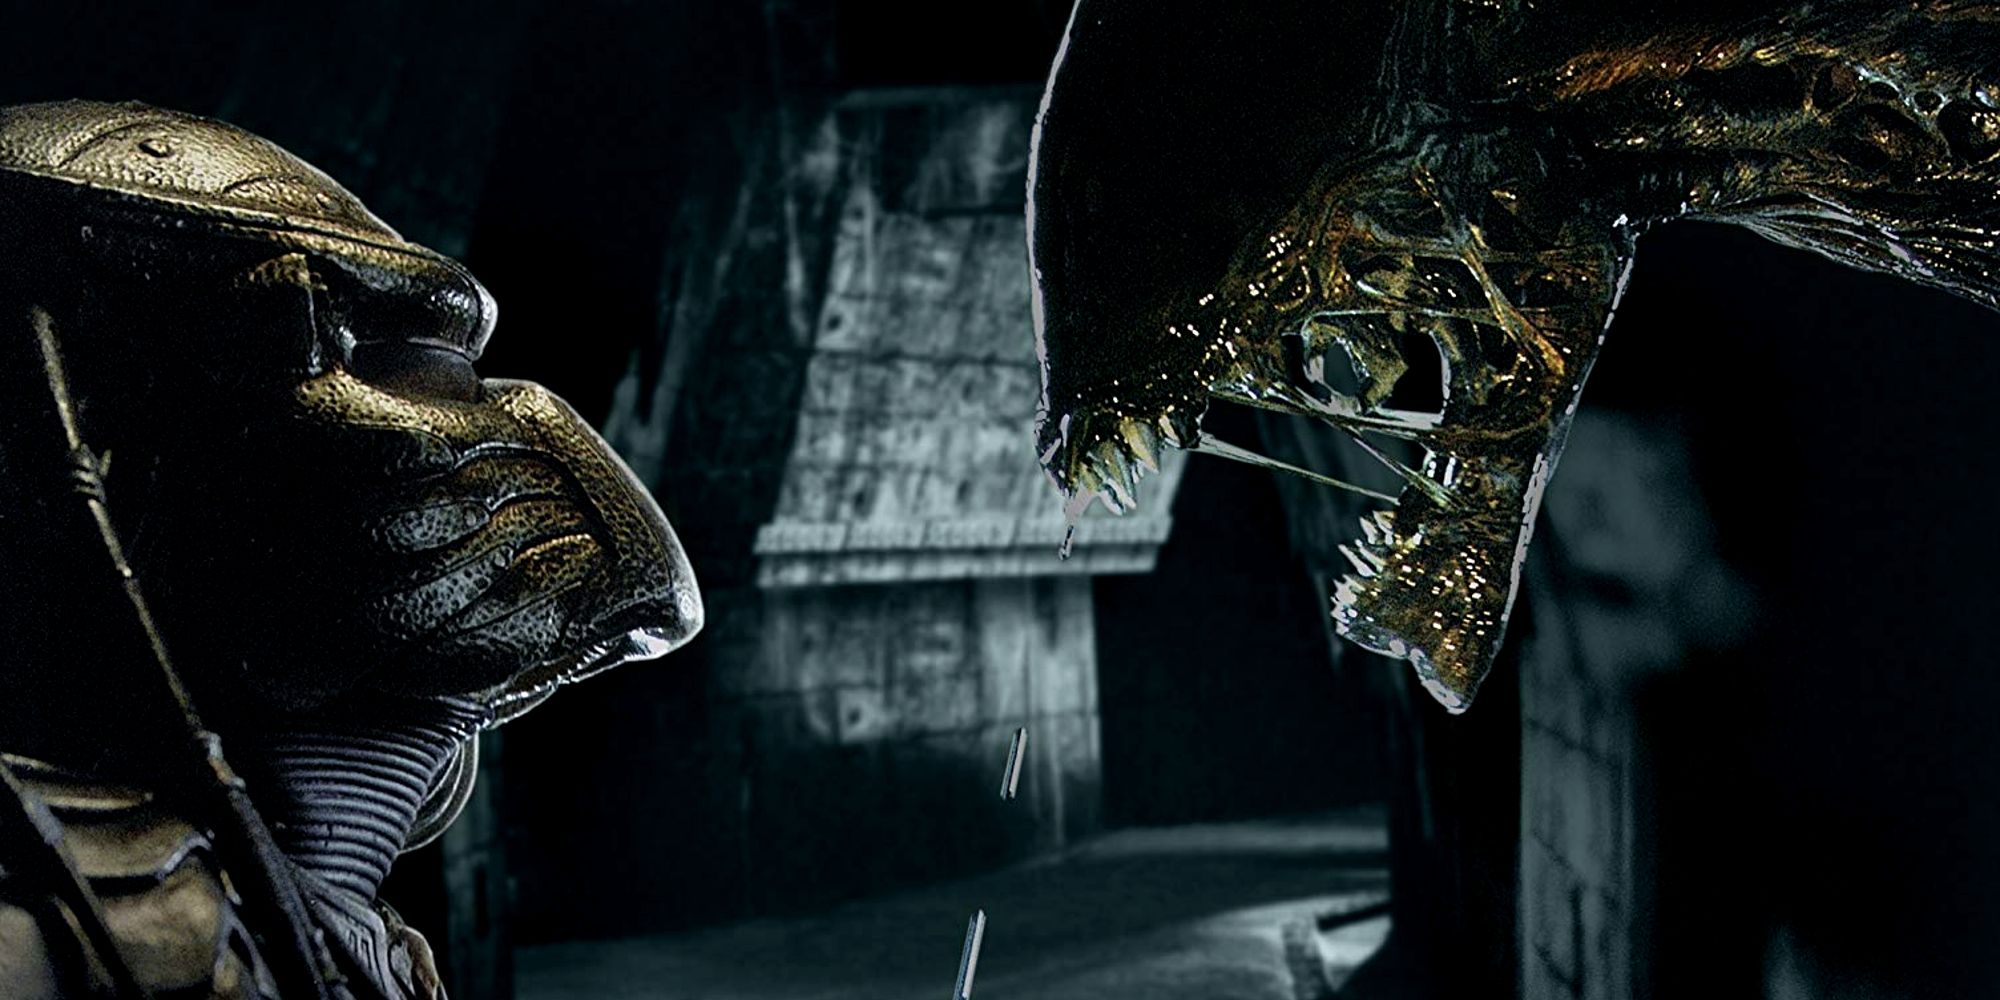 Alien vs. Predator 3? Disney’s Reboots Make Another AVP Inevitable